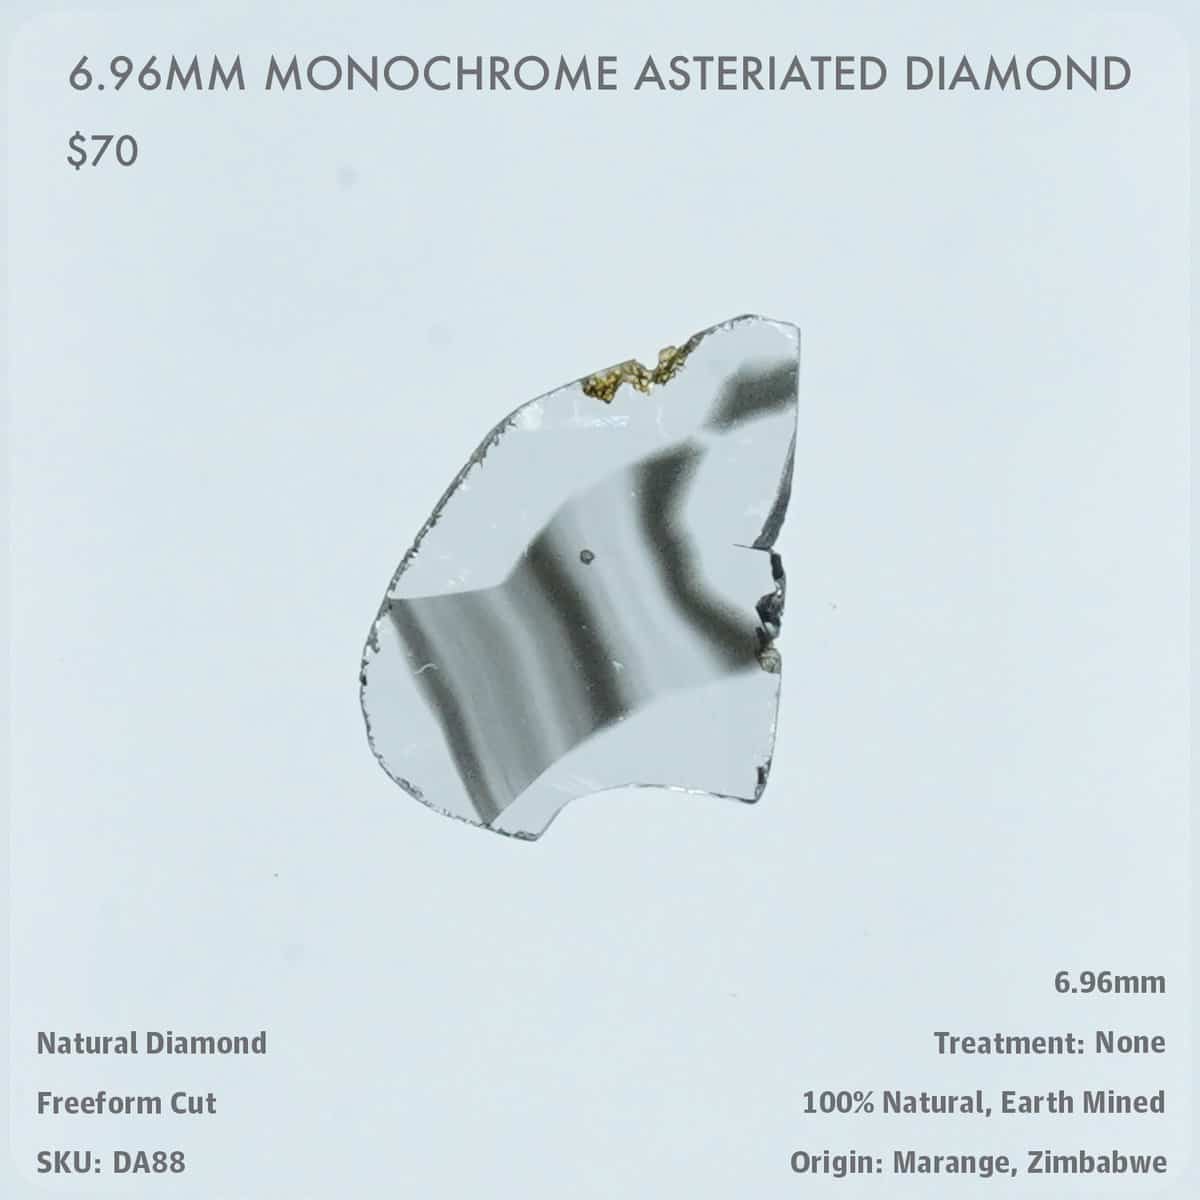 6.96mm Monochrome Asteriated Diamond